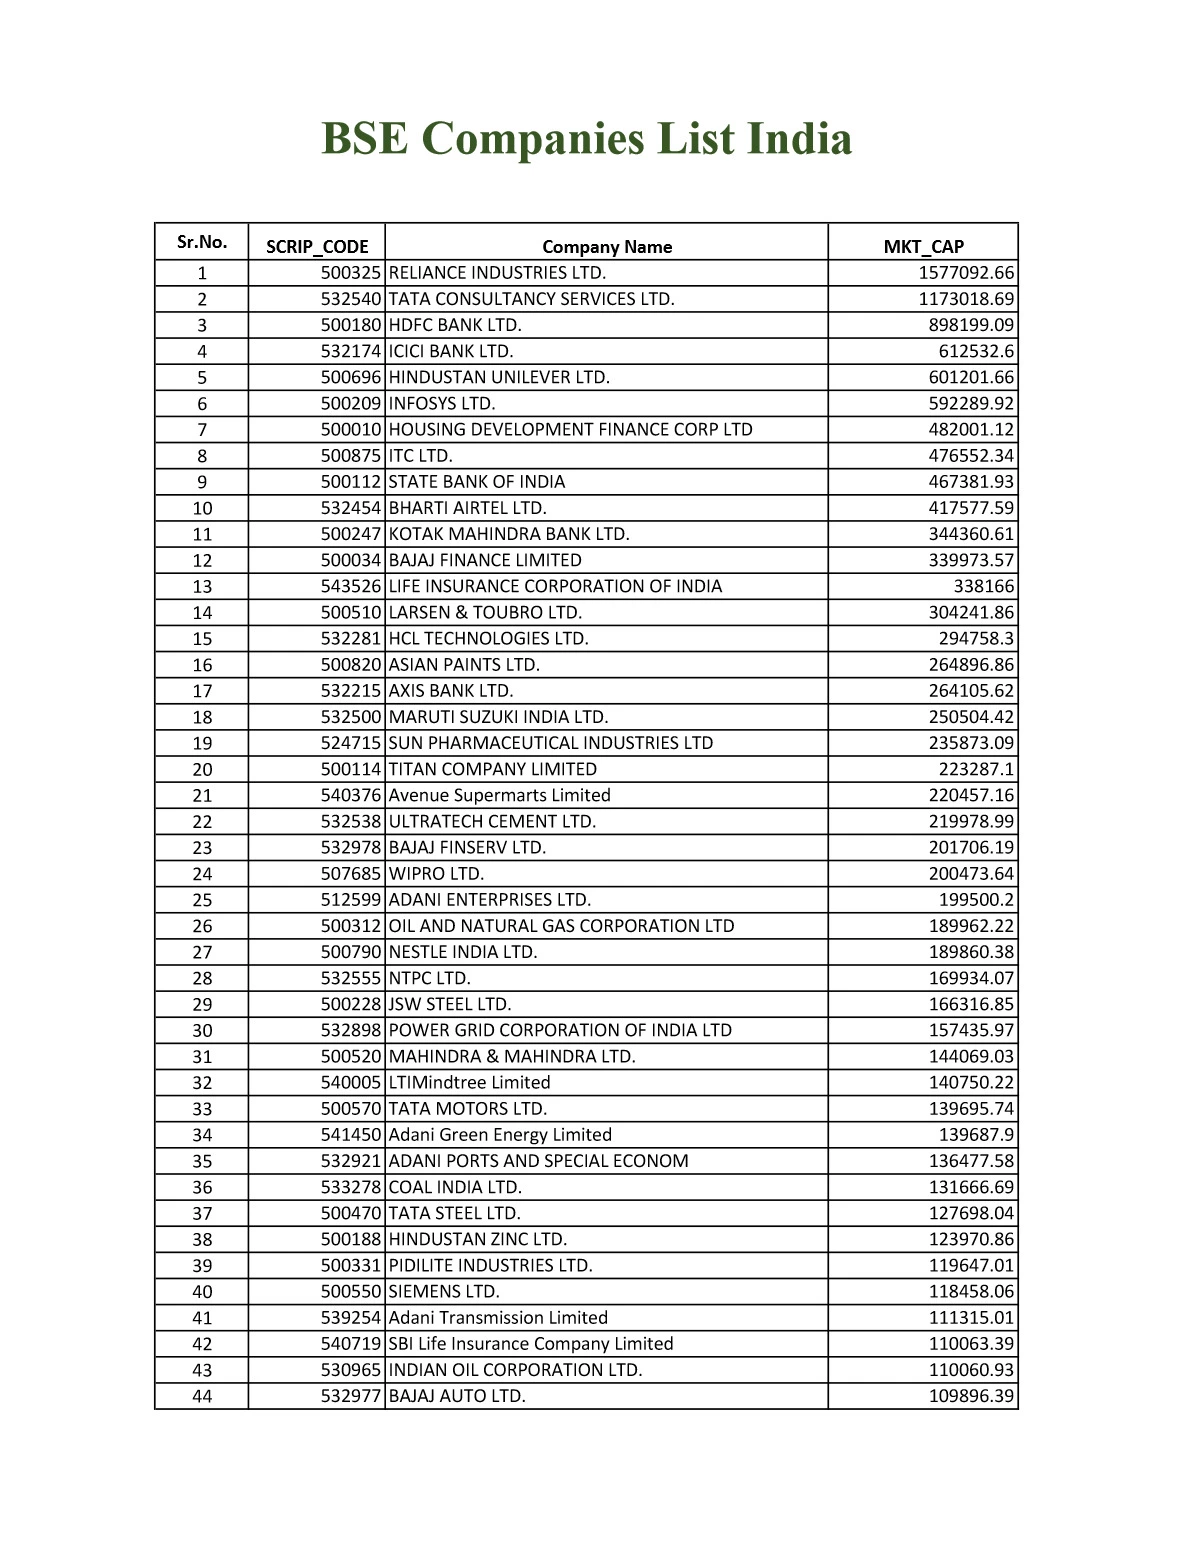 BSE List of Companies